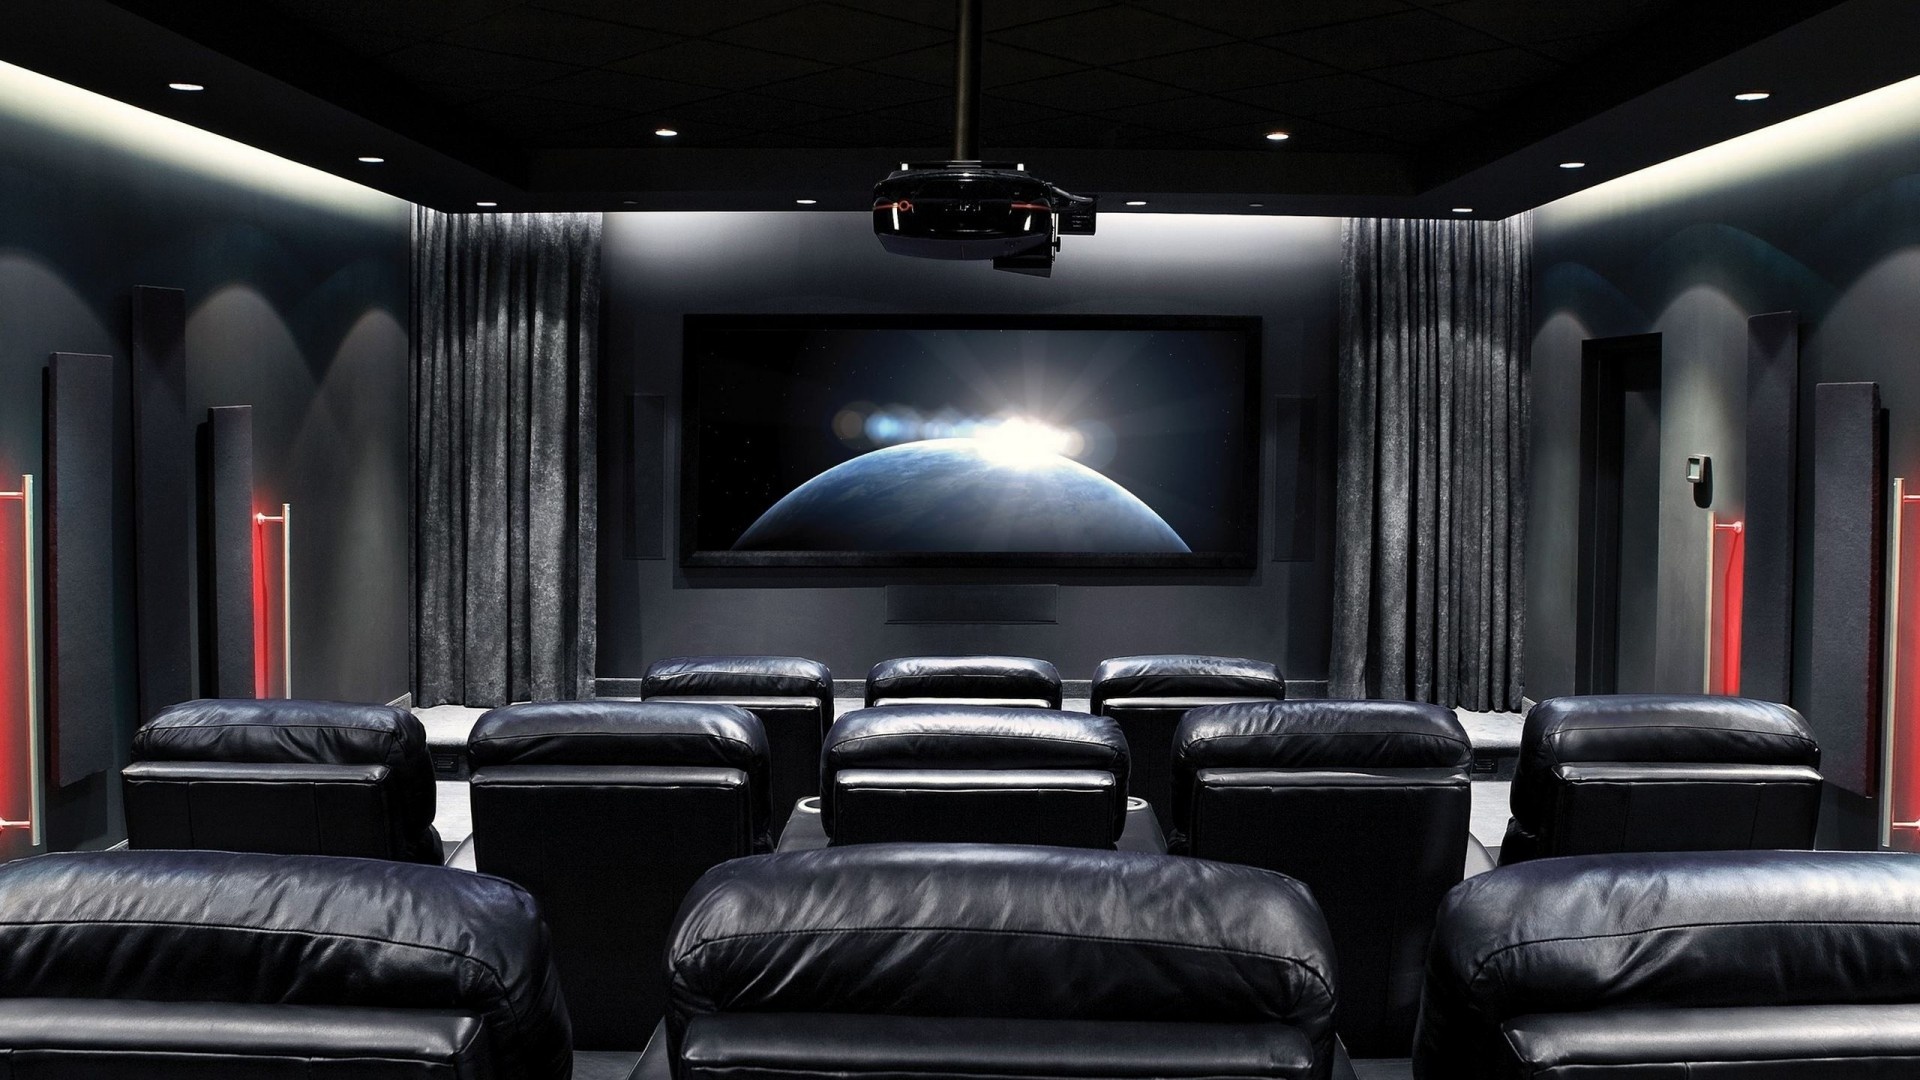 The movie theater, Cinematic ambiance, Theater interior, Film screening, 1920x1080 Full HD Desktop